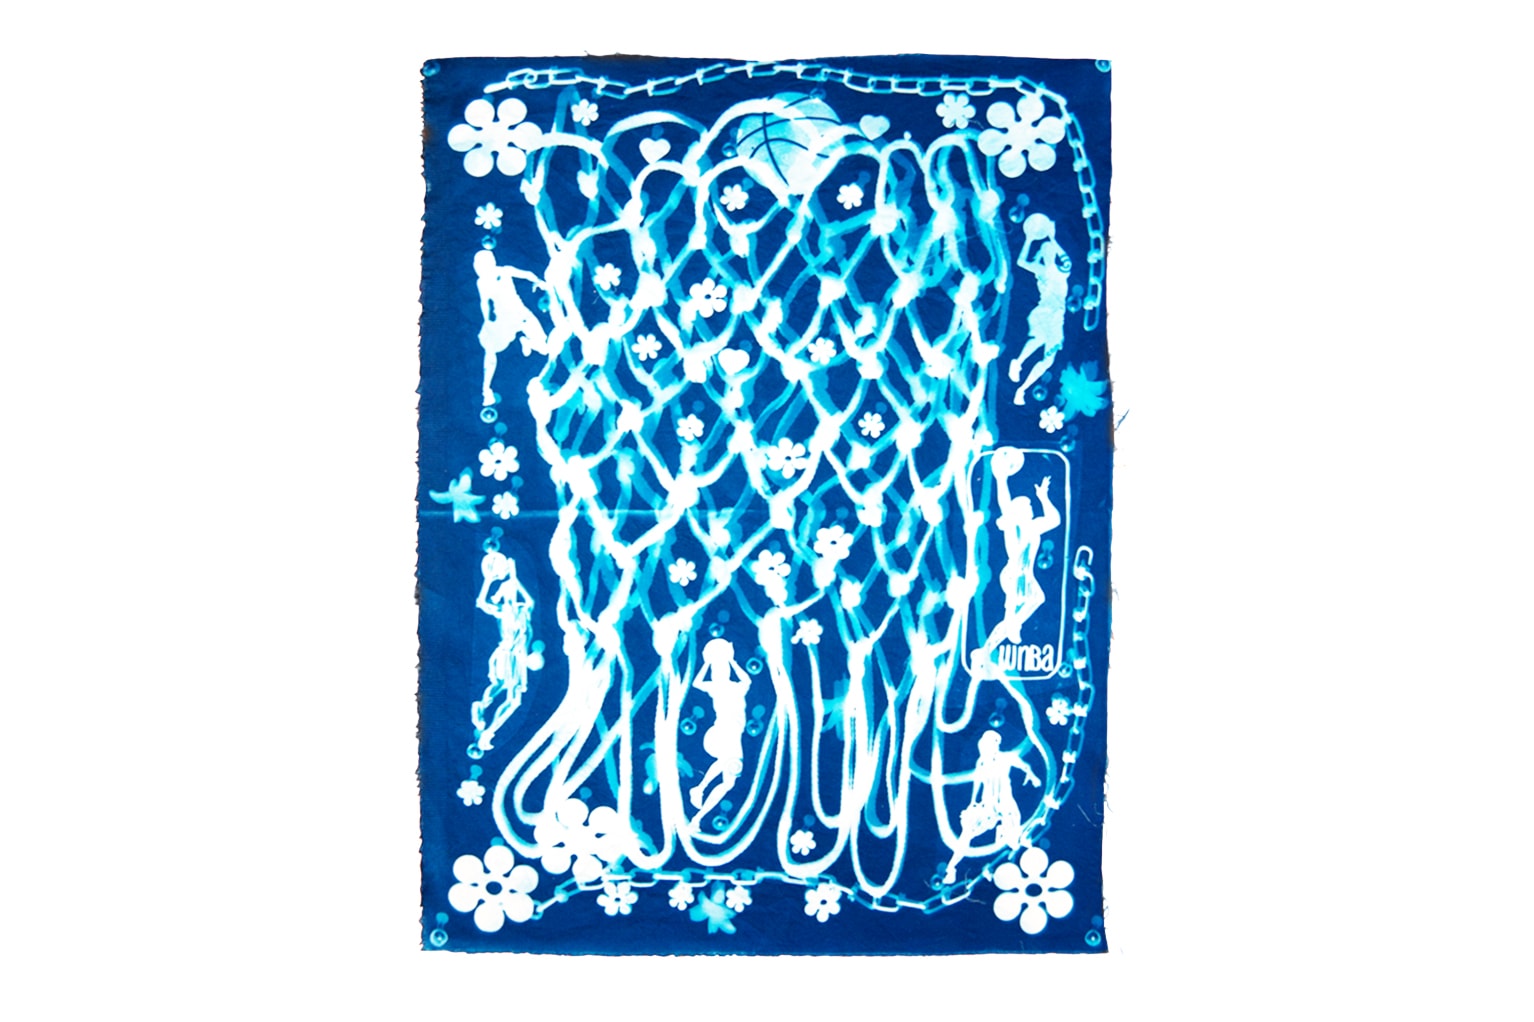 andrea bergart peace love basketball cyanotype fabric art artwork exhibitiona